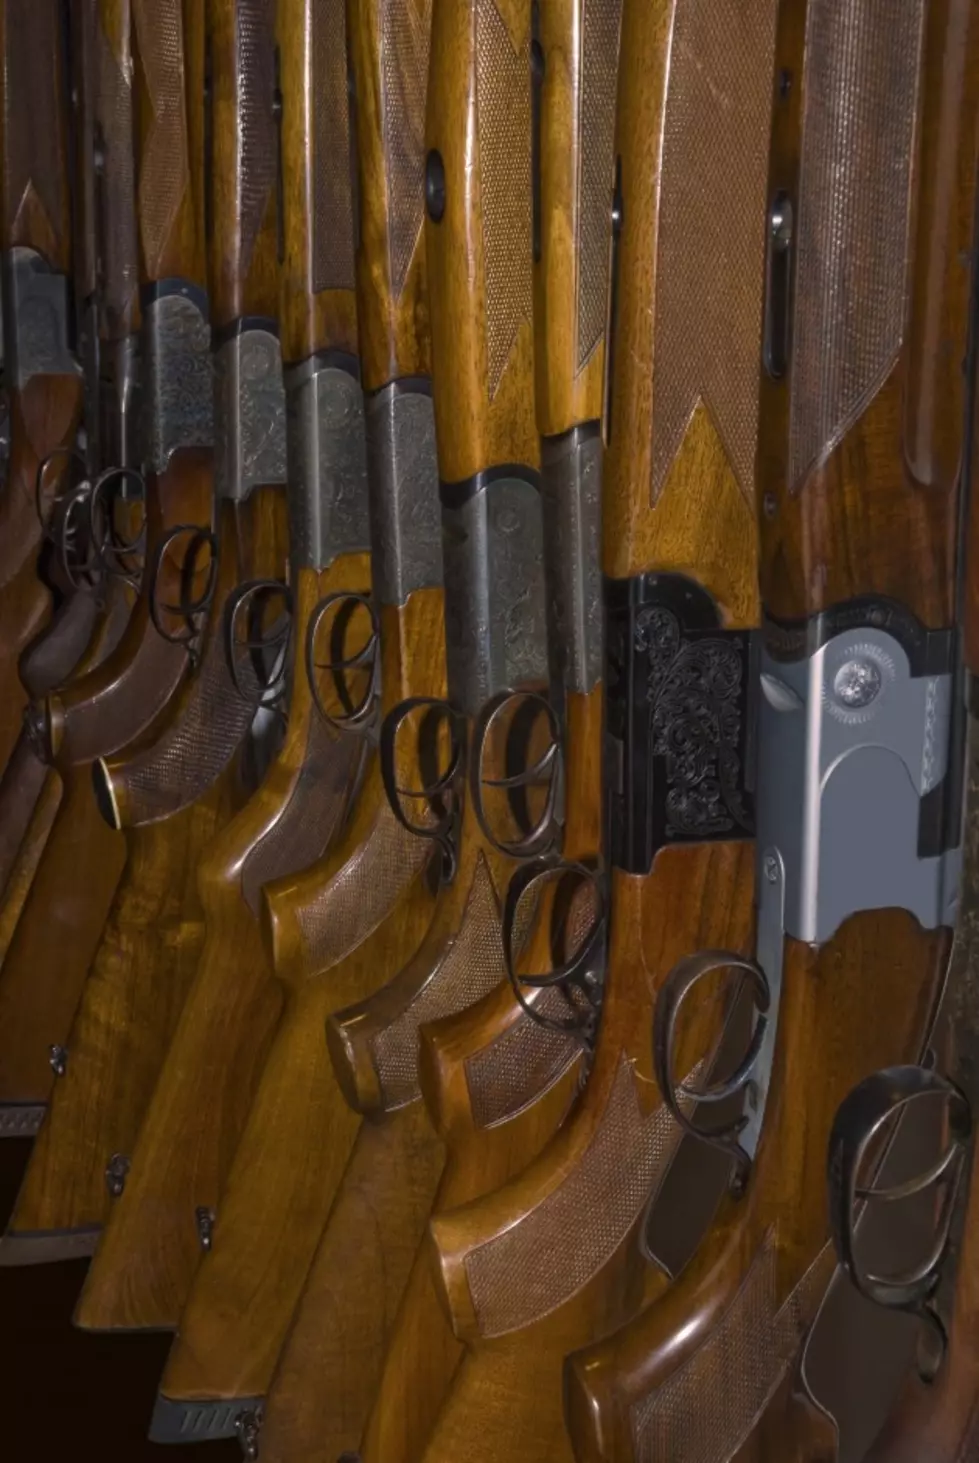 MSUB Offers Student Firearm Storage